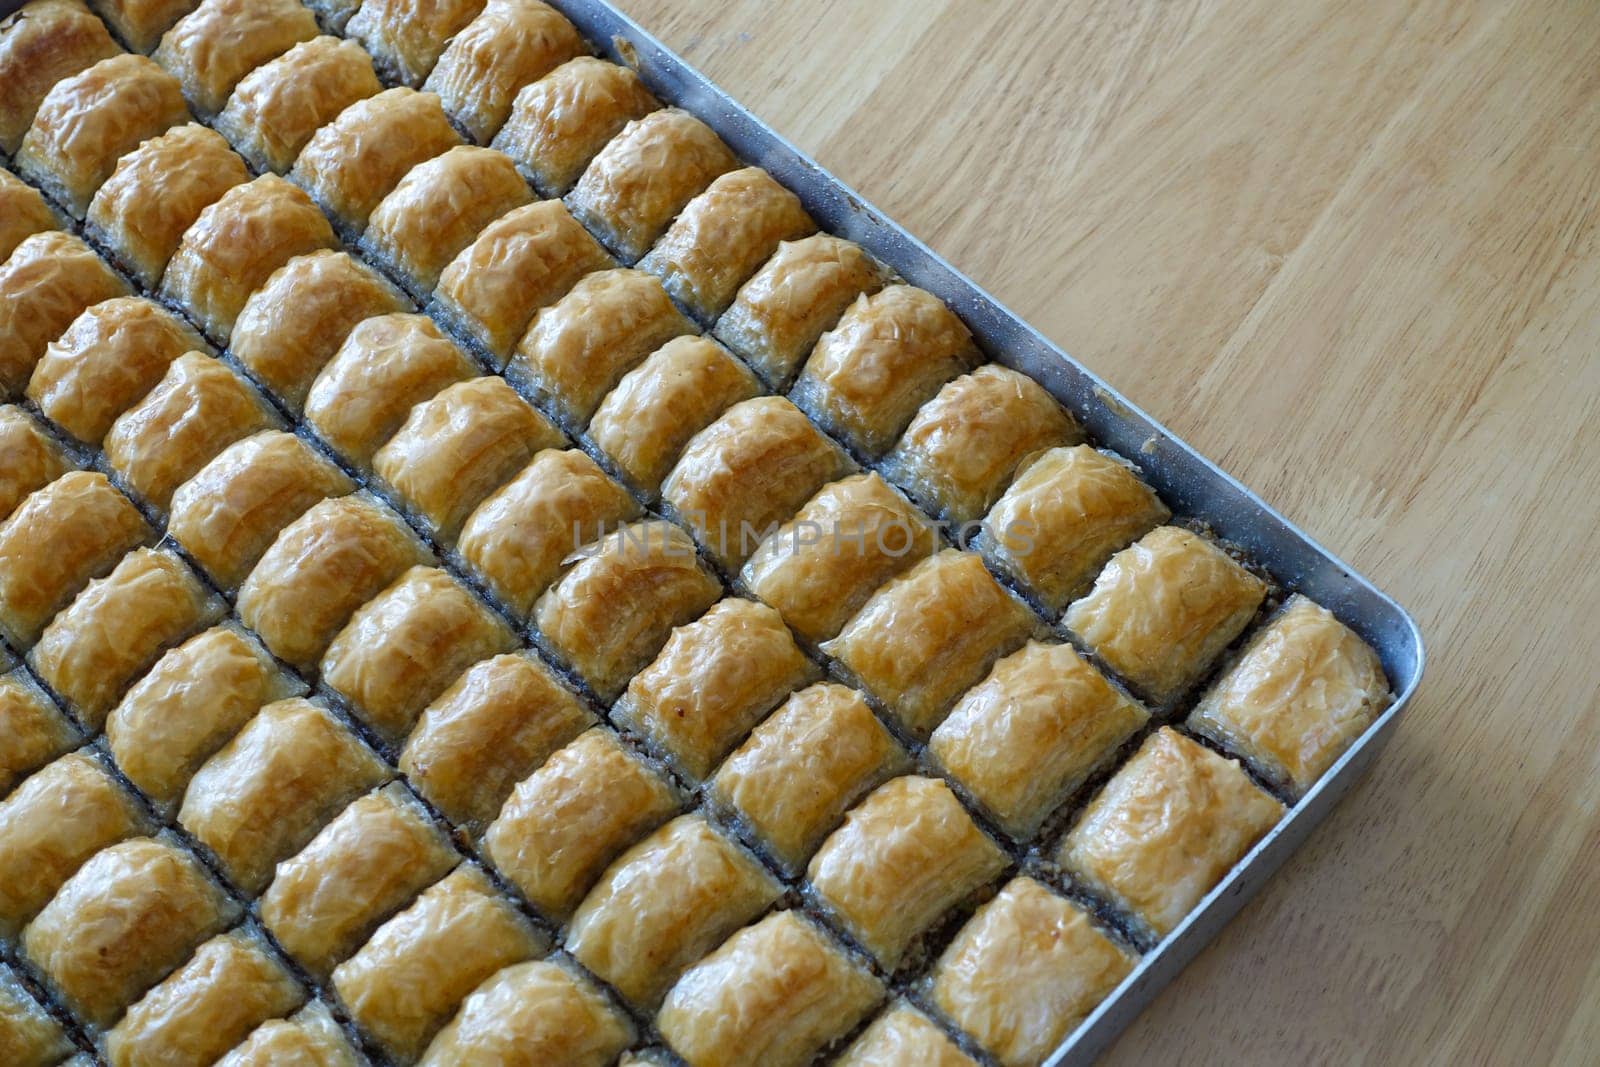 Famous Turkish baklava dessert sliced in a baking tray, Gaziantep baklava, by nhatipoglu